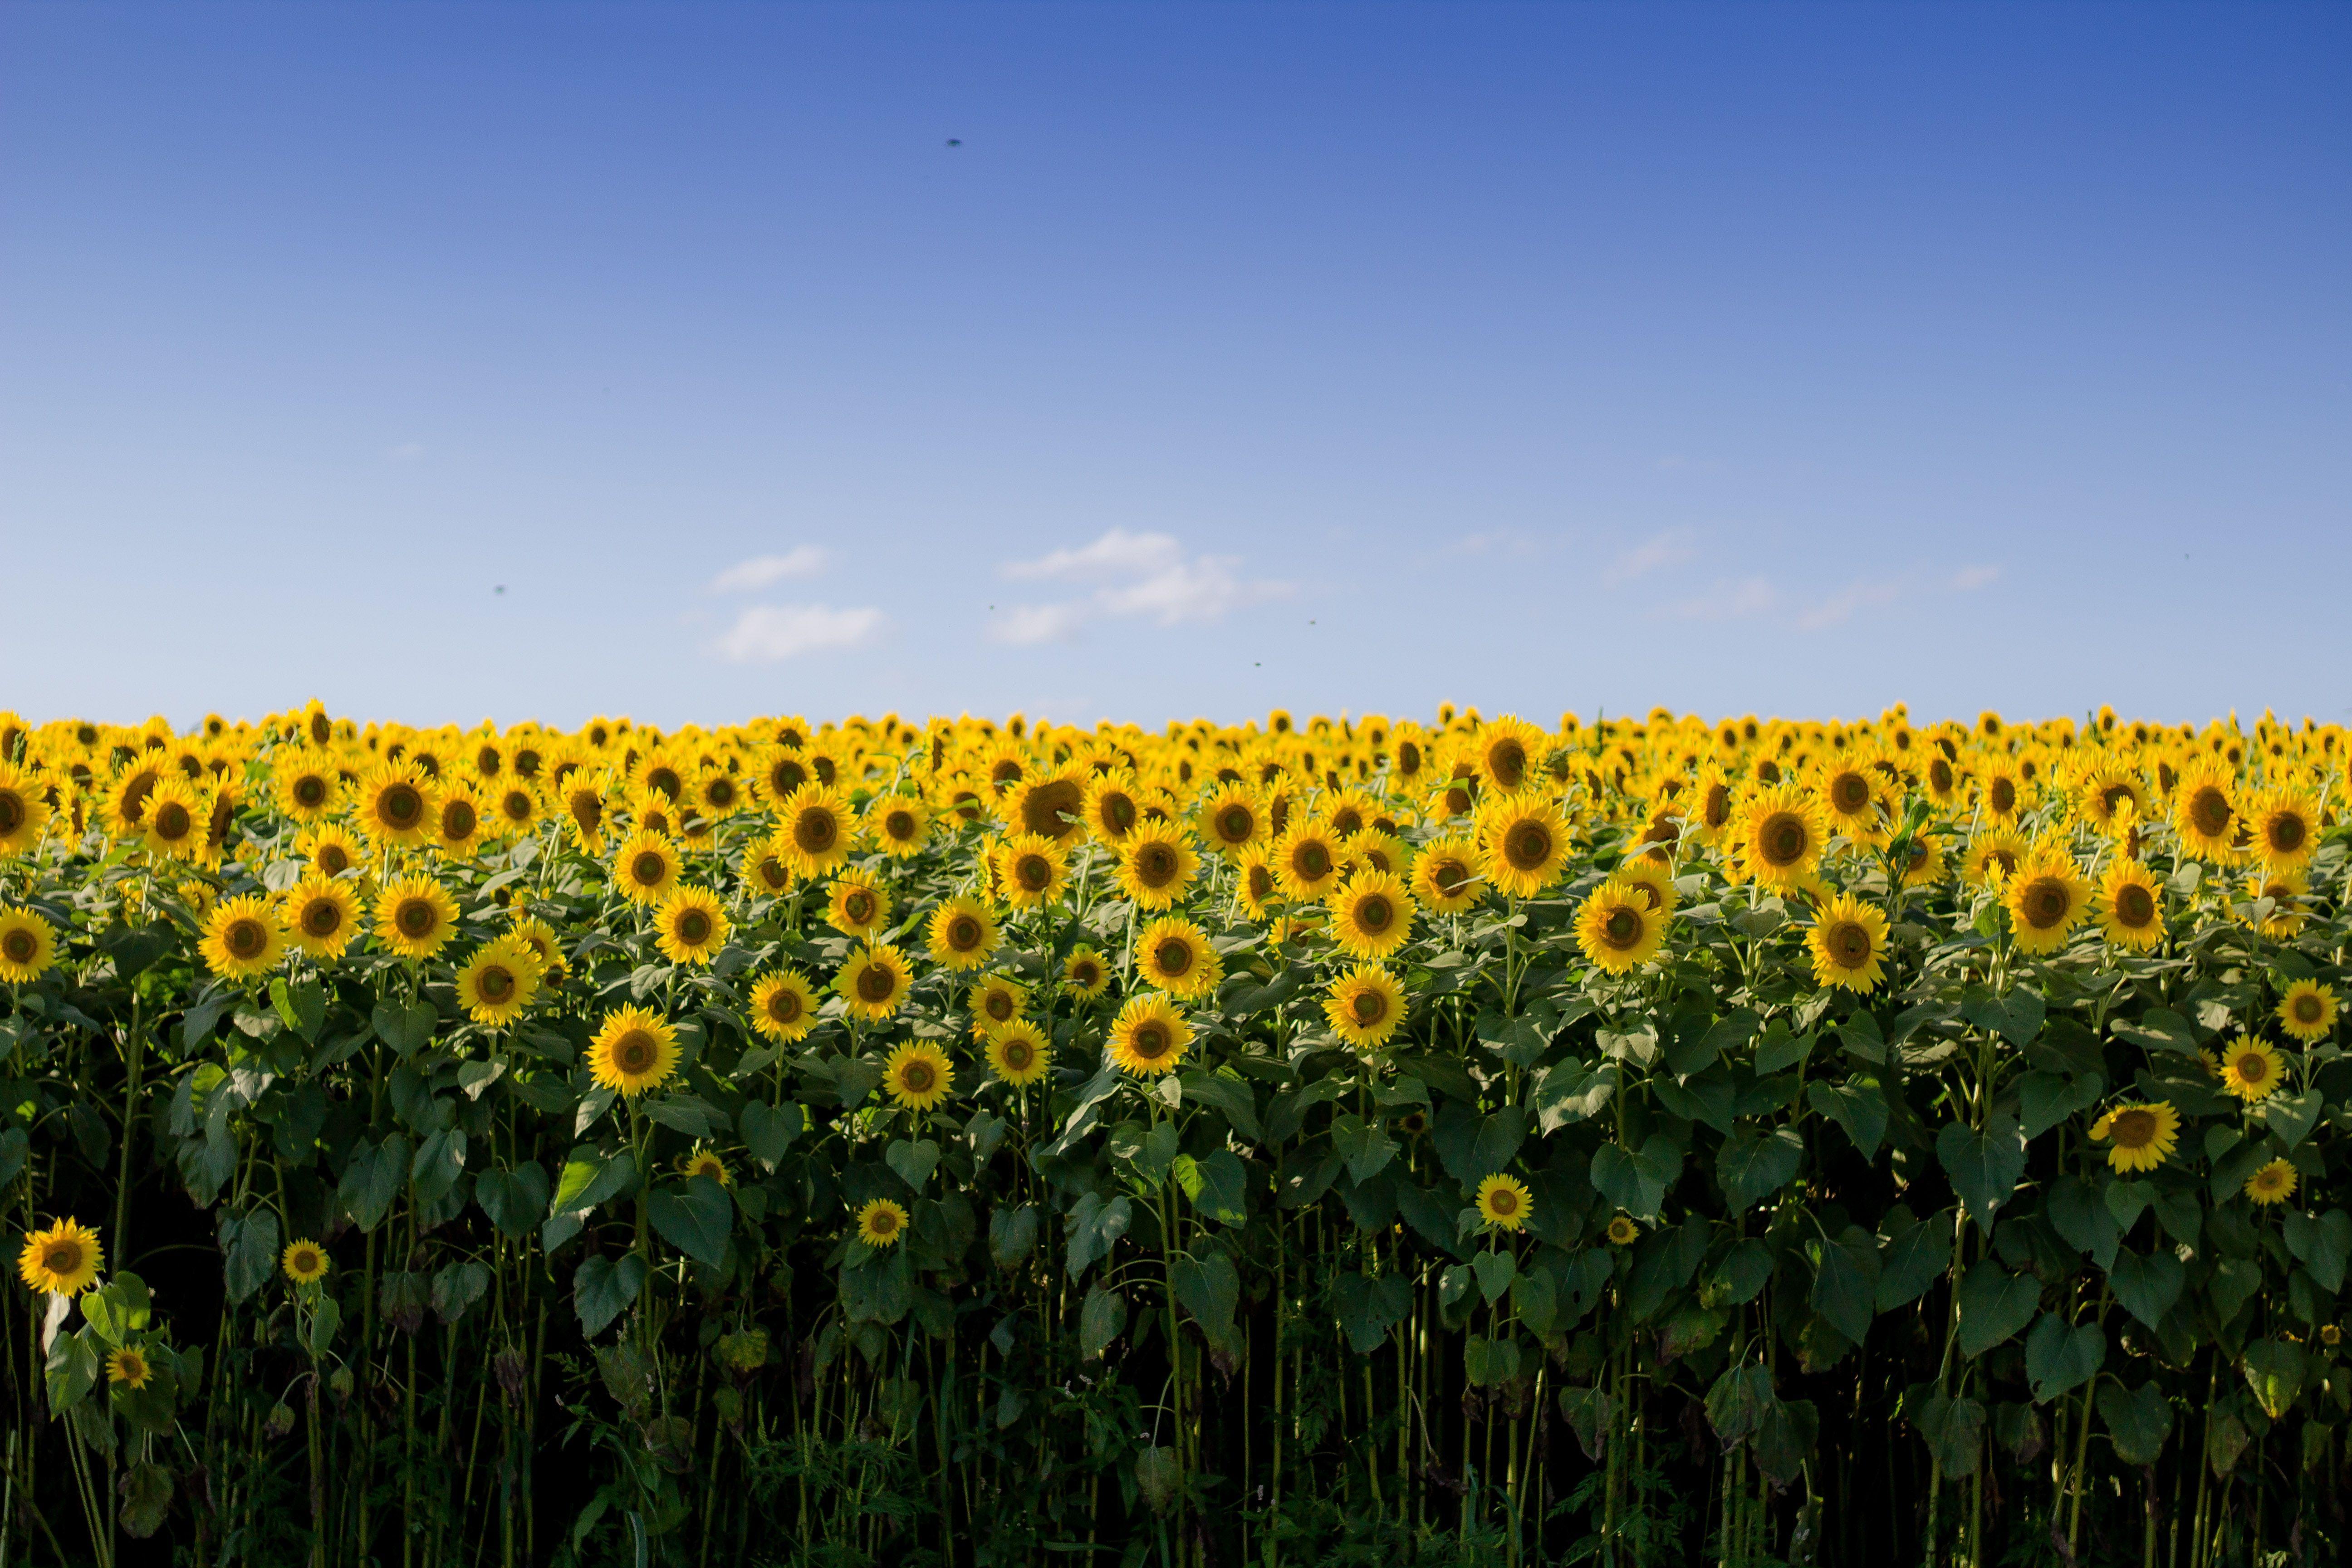 Sunflower 4k Wallpapers - Top Free Sunflower 4k Backgrounds